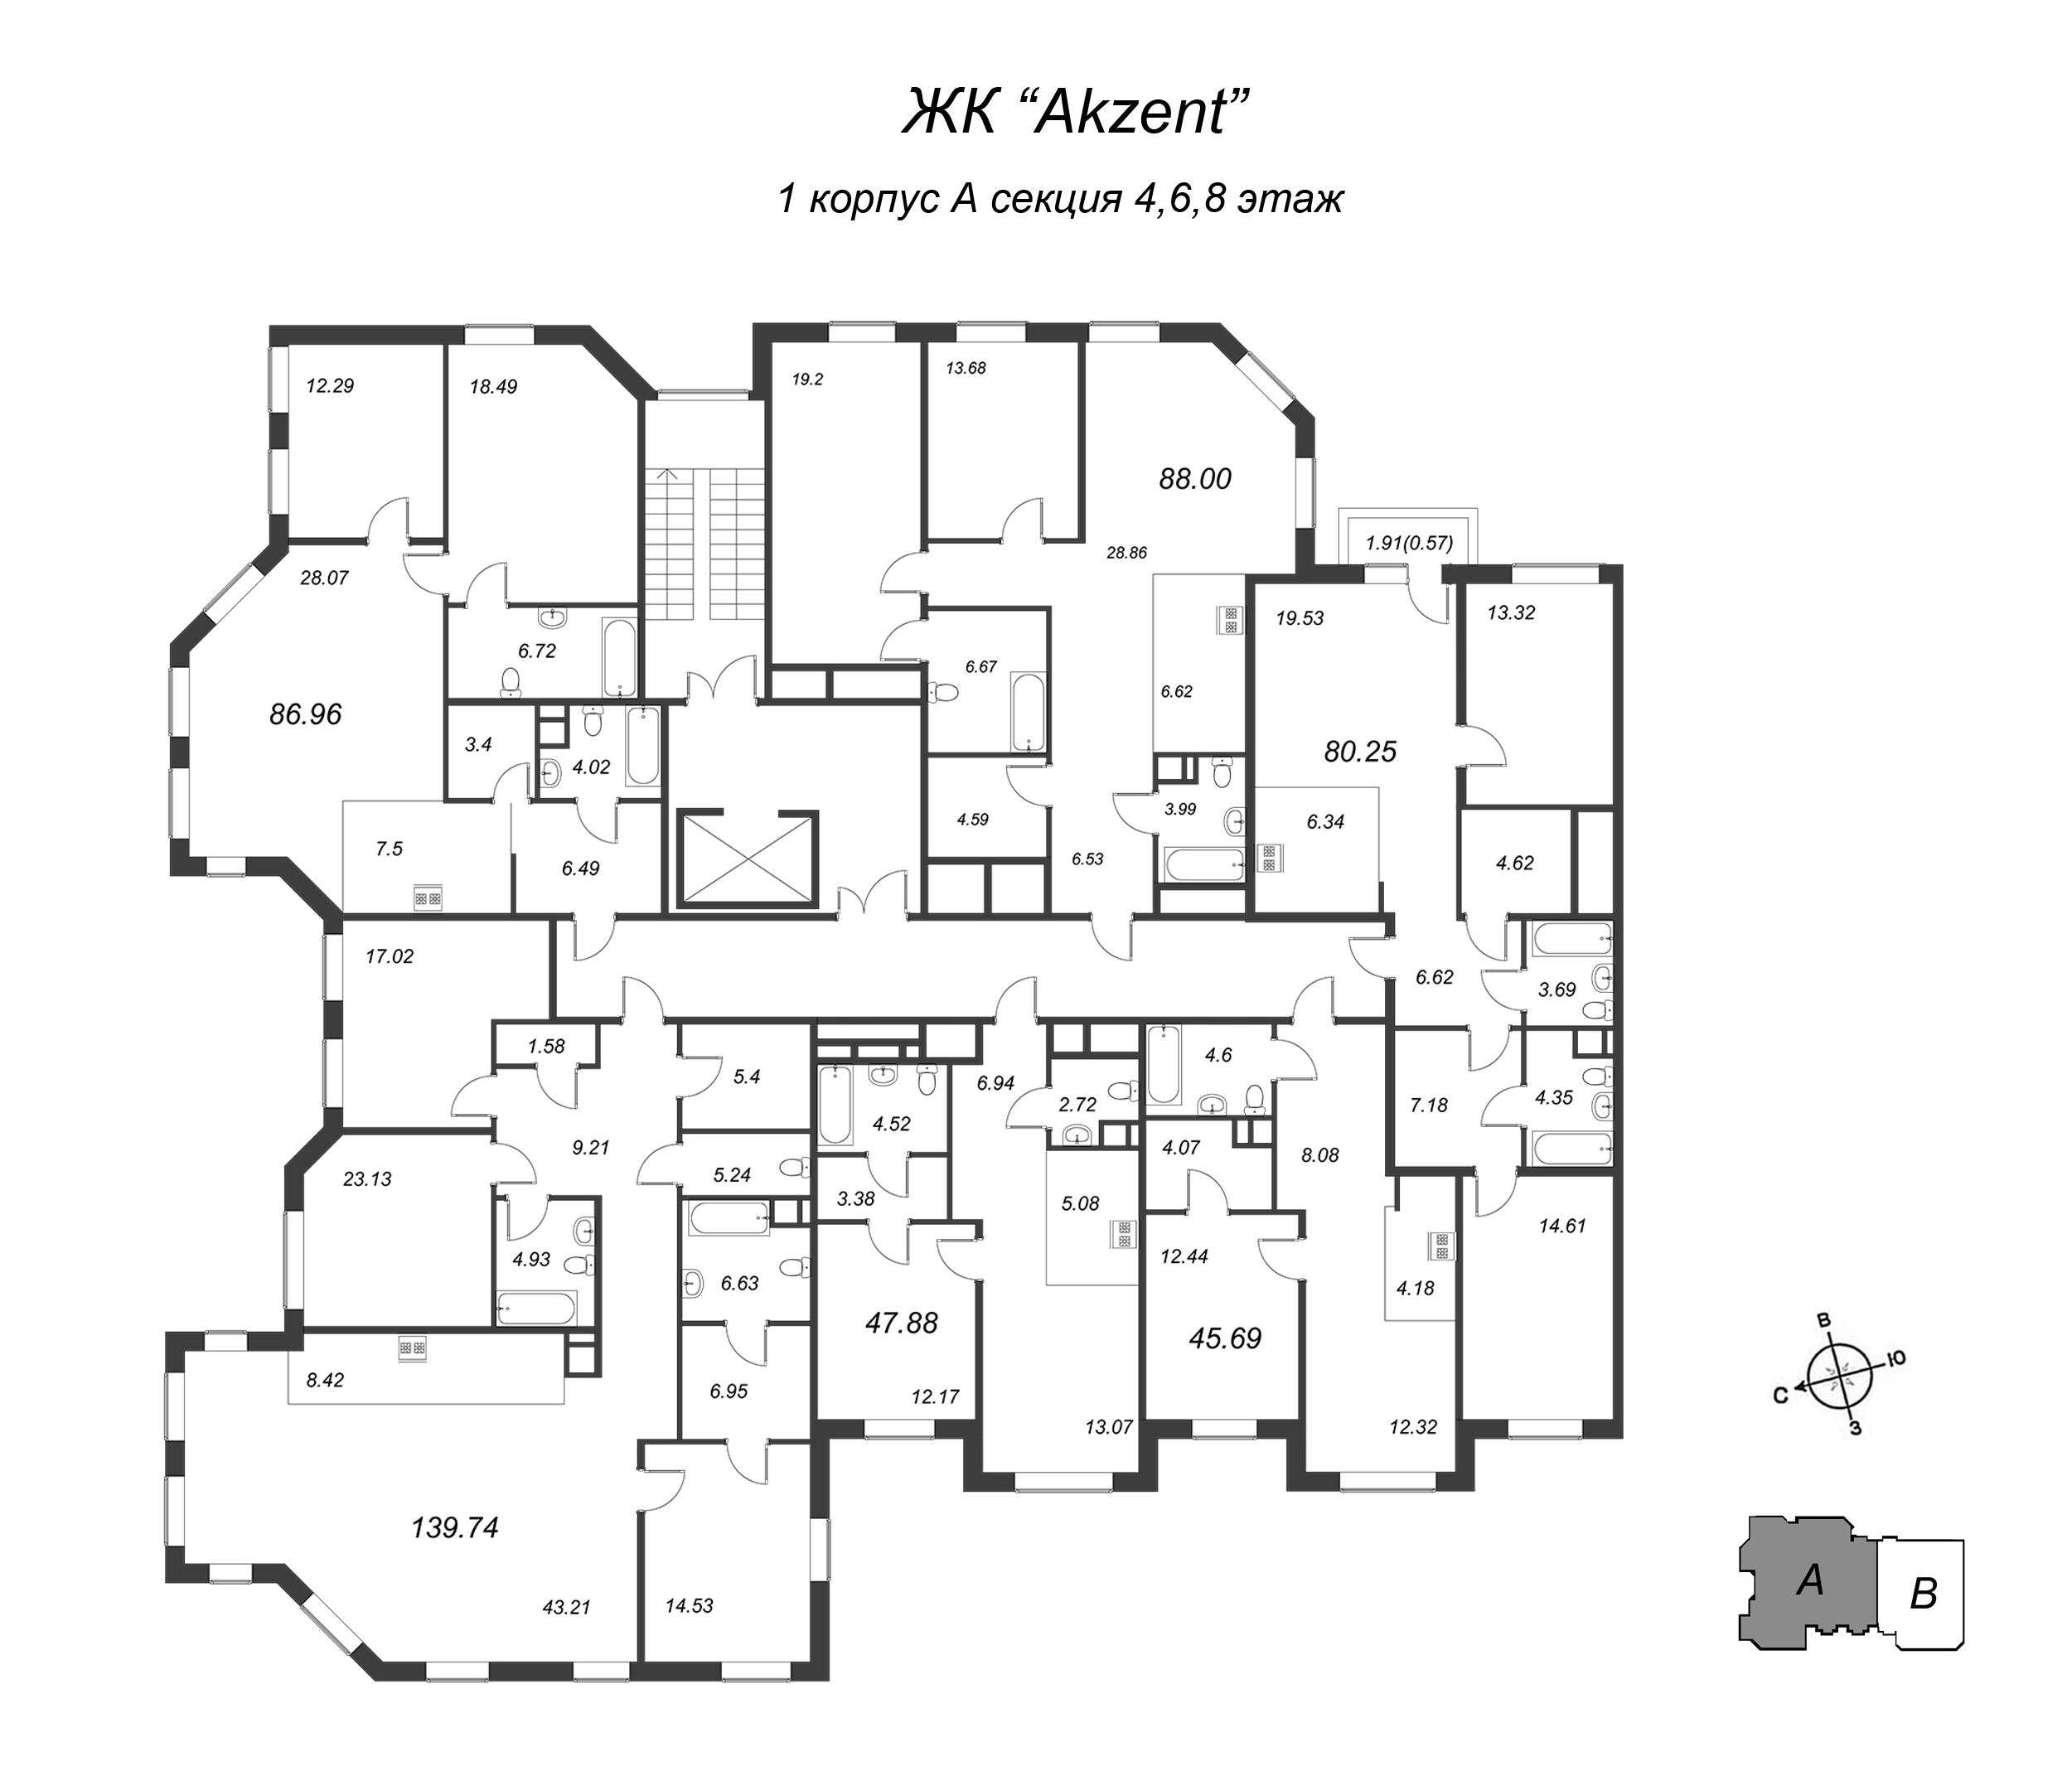 4-комнатная (Евро) квартира, 139.74 м² - планировка этажа